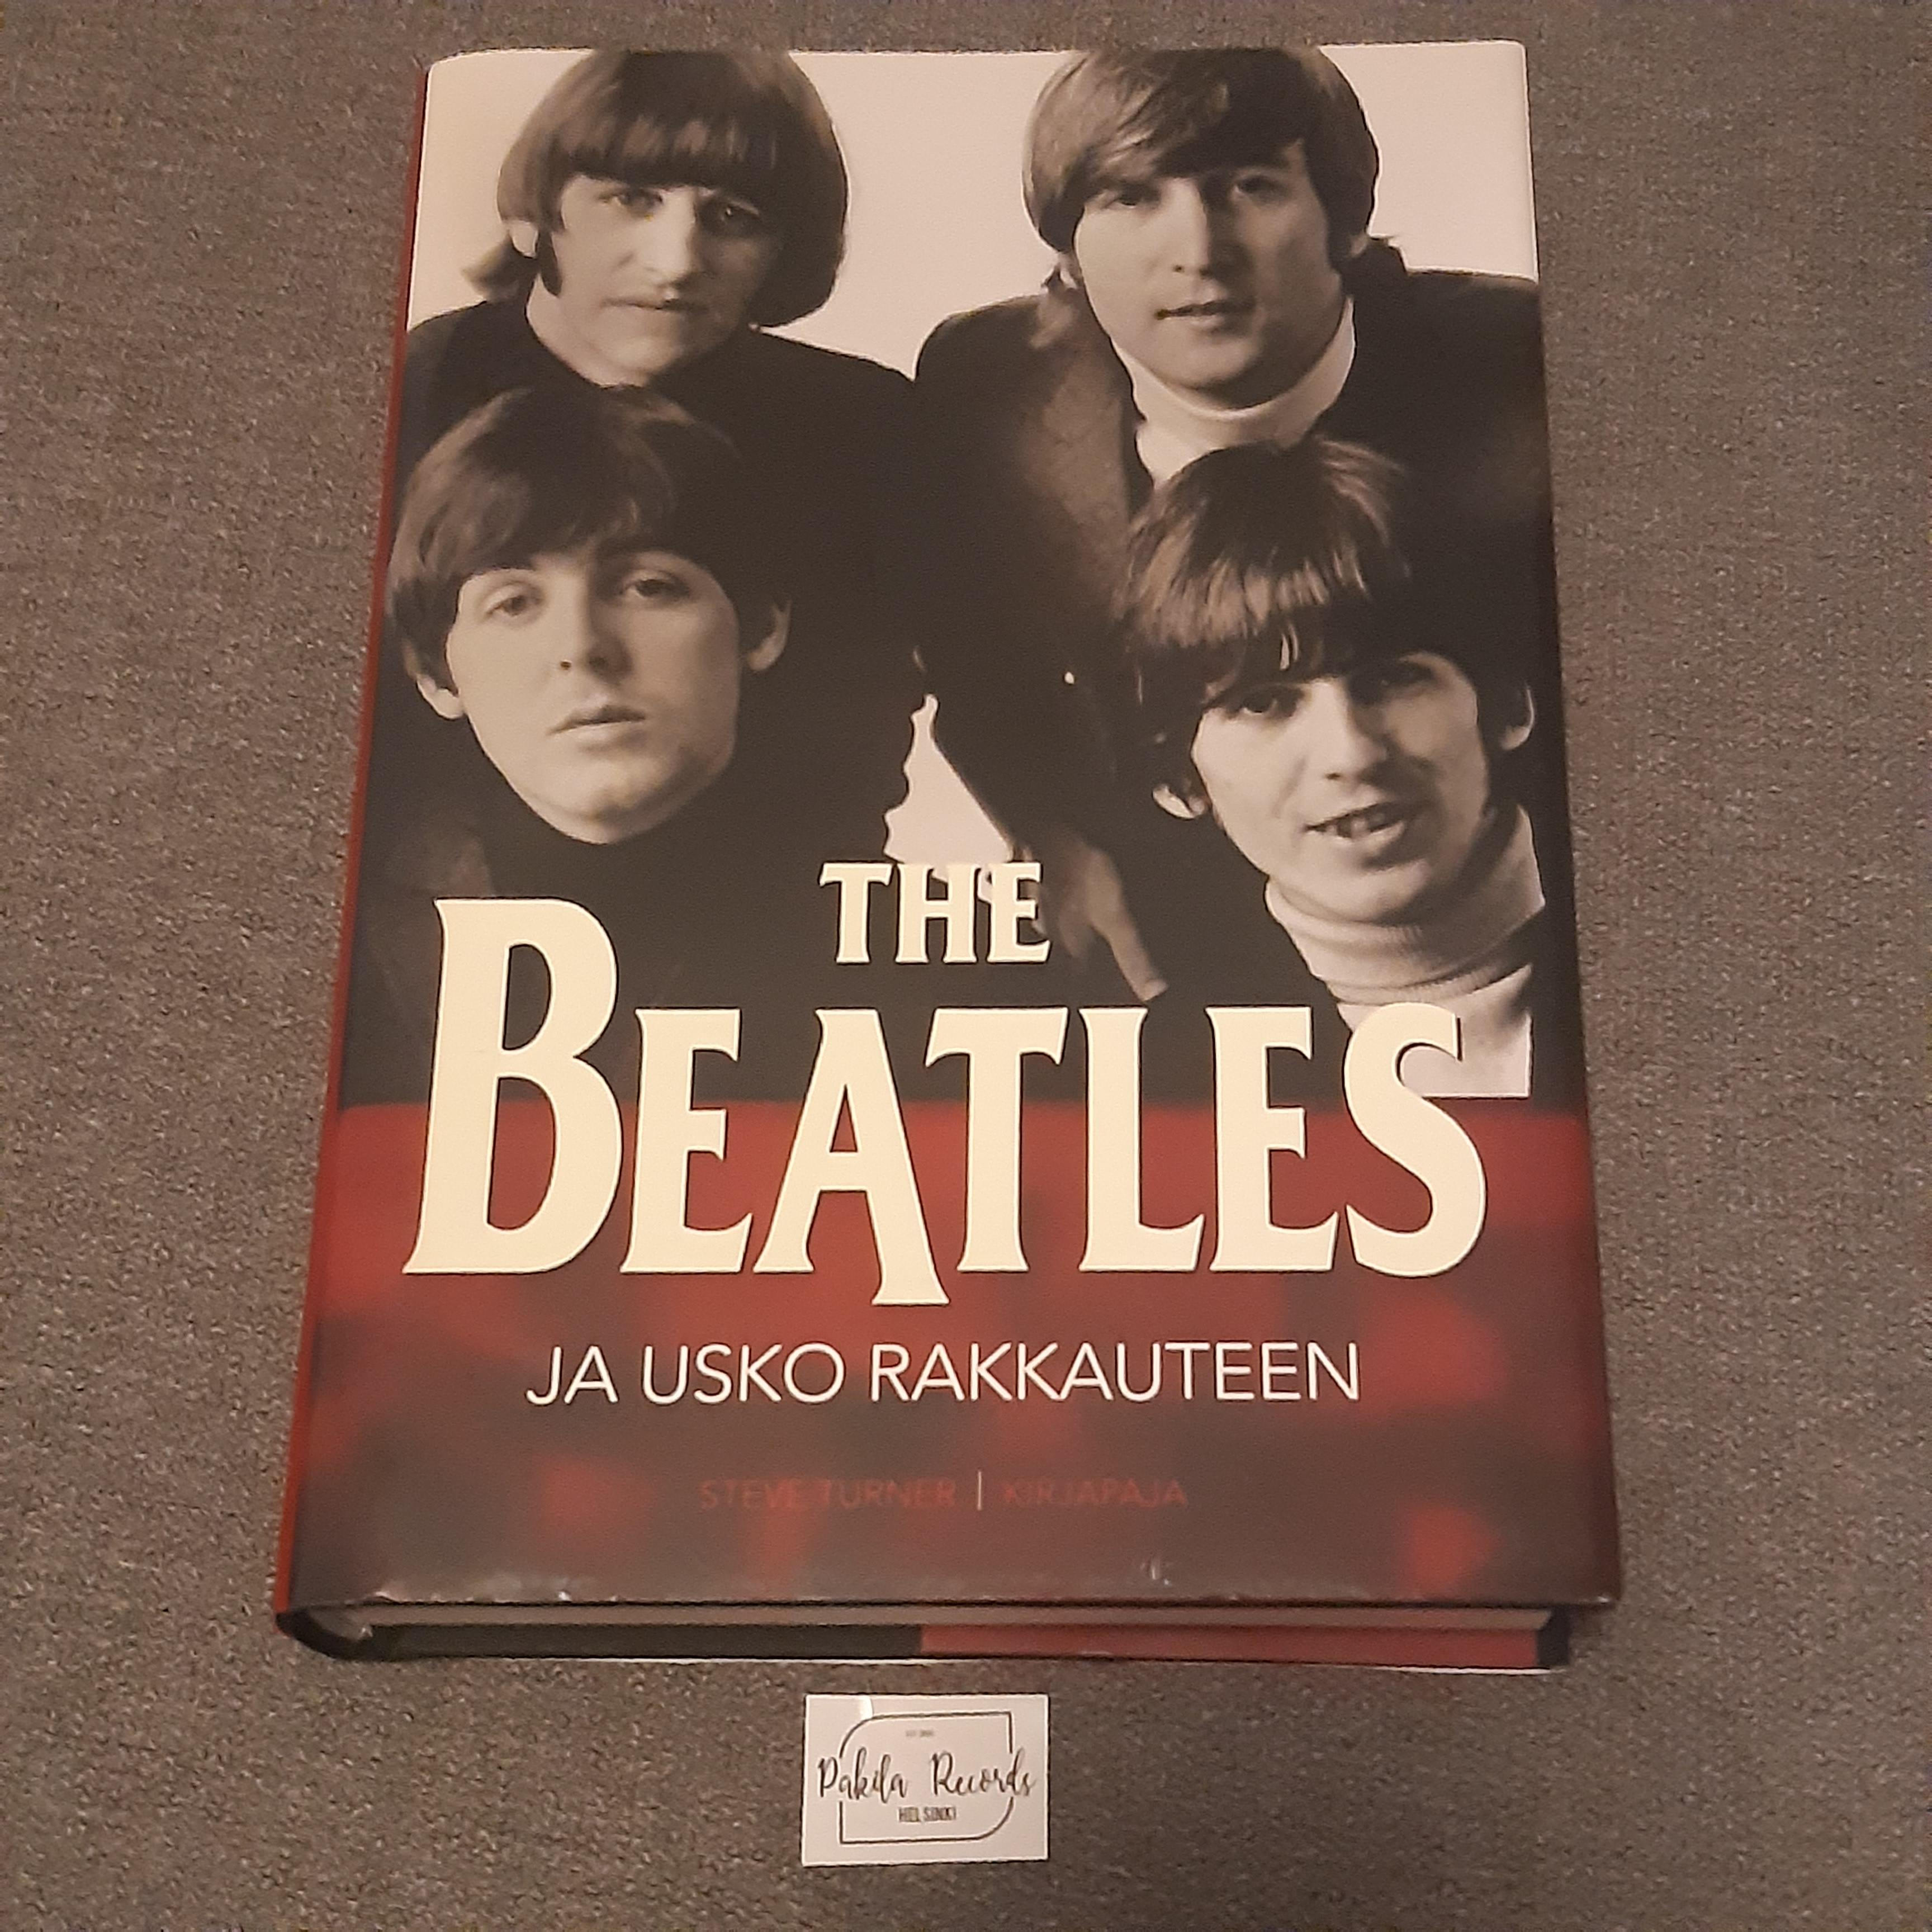 The Beatles ja usko rakkauteen - Steve Turner - Kirja (käytetty)